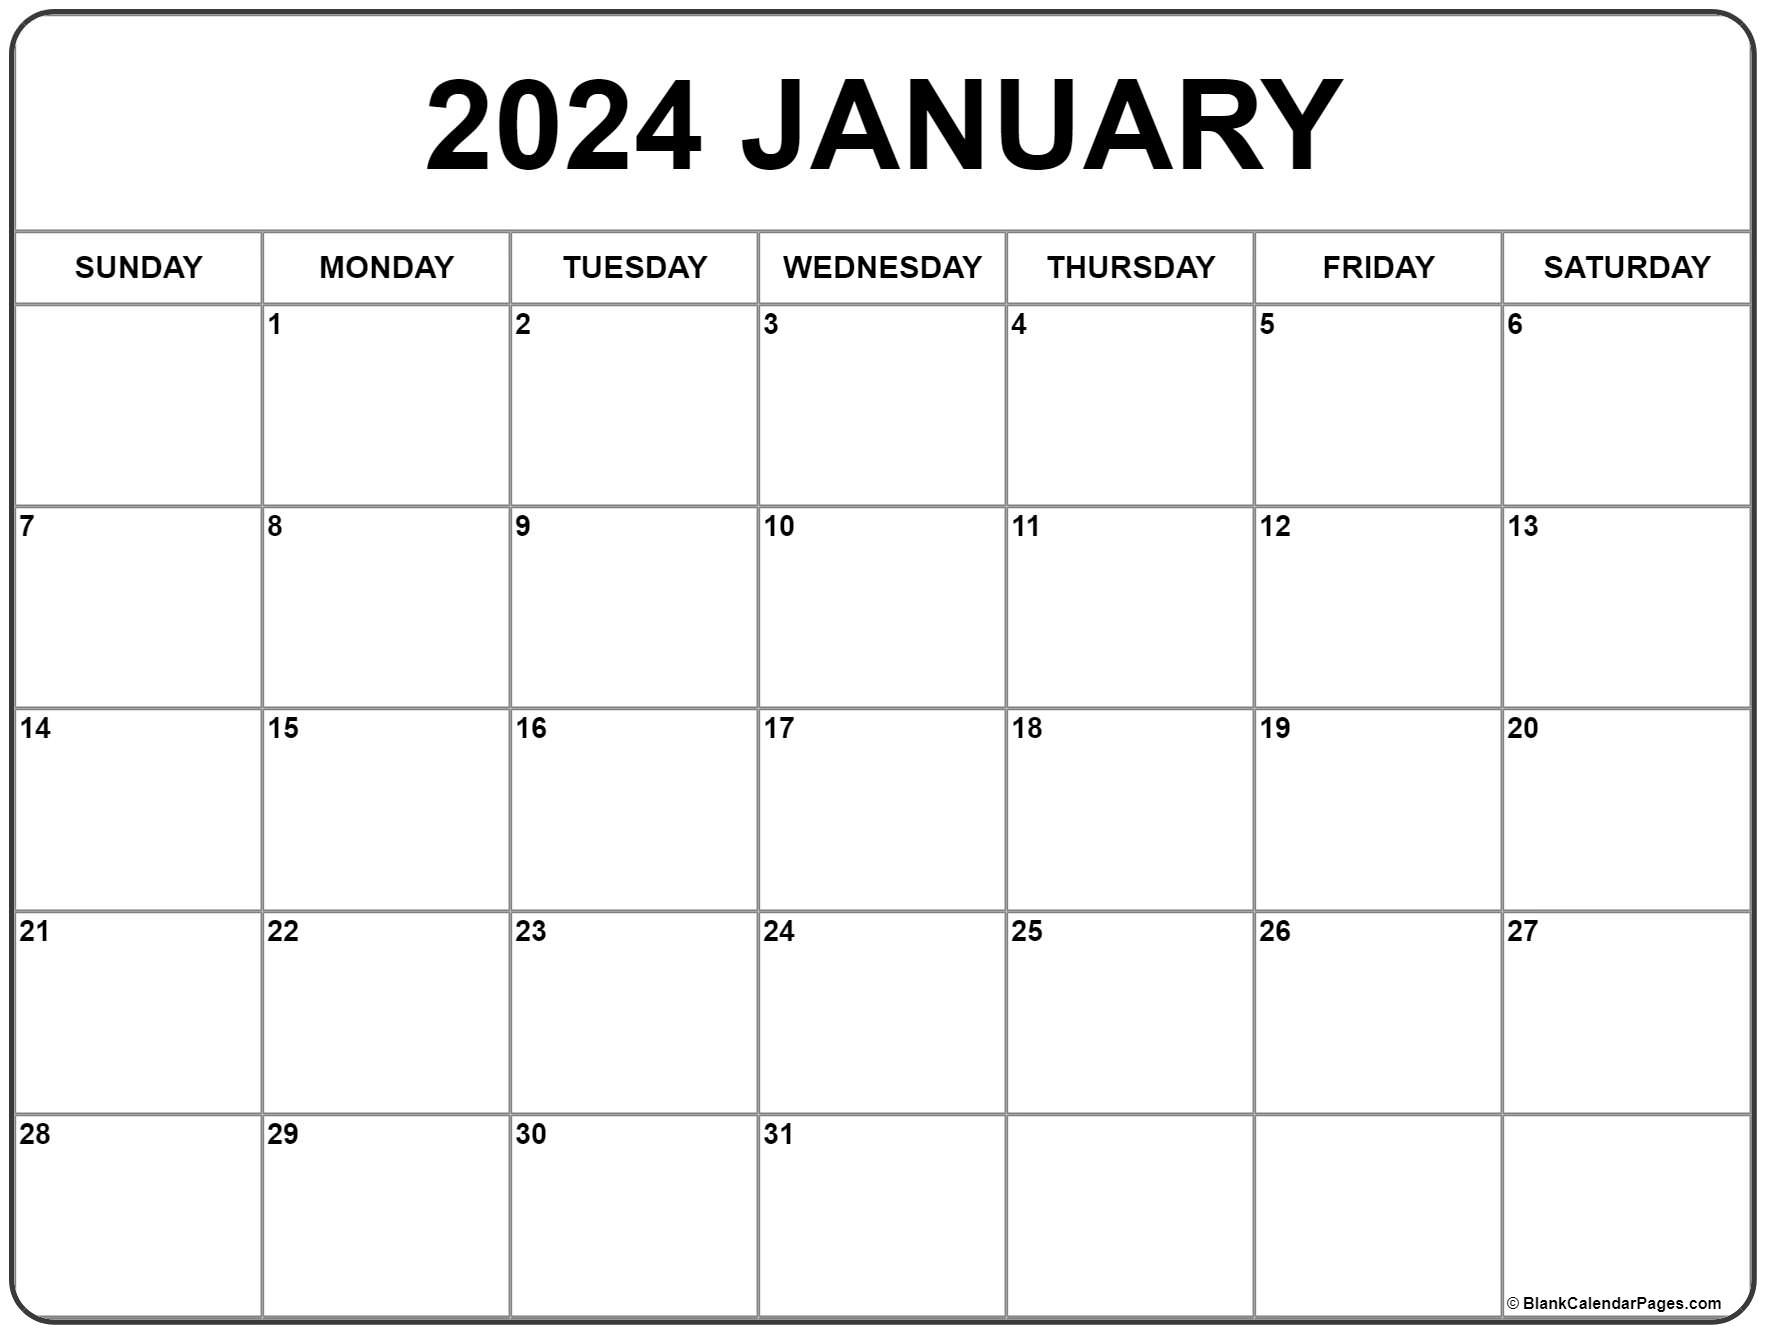 January 2024 Calendar | Free Printable Calendar for 2024 Calendar January Printable